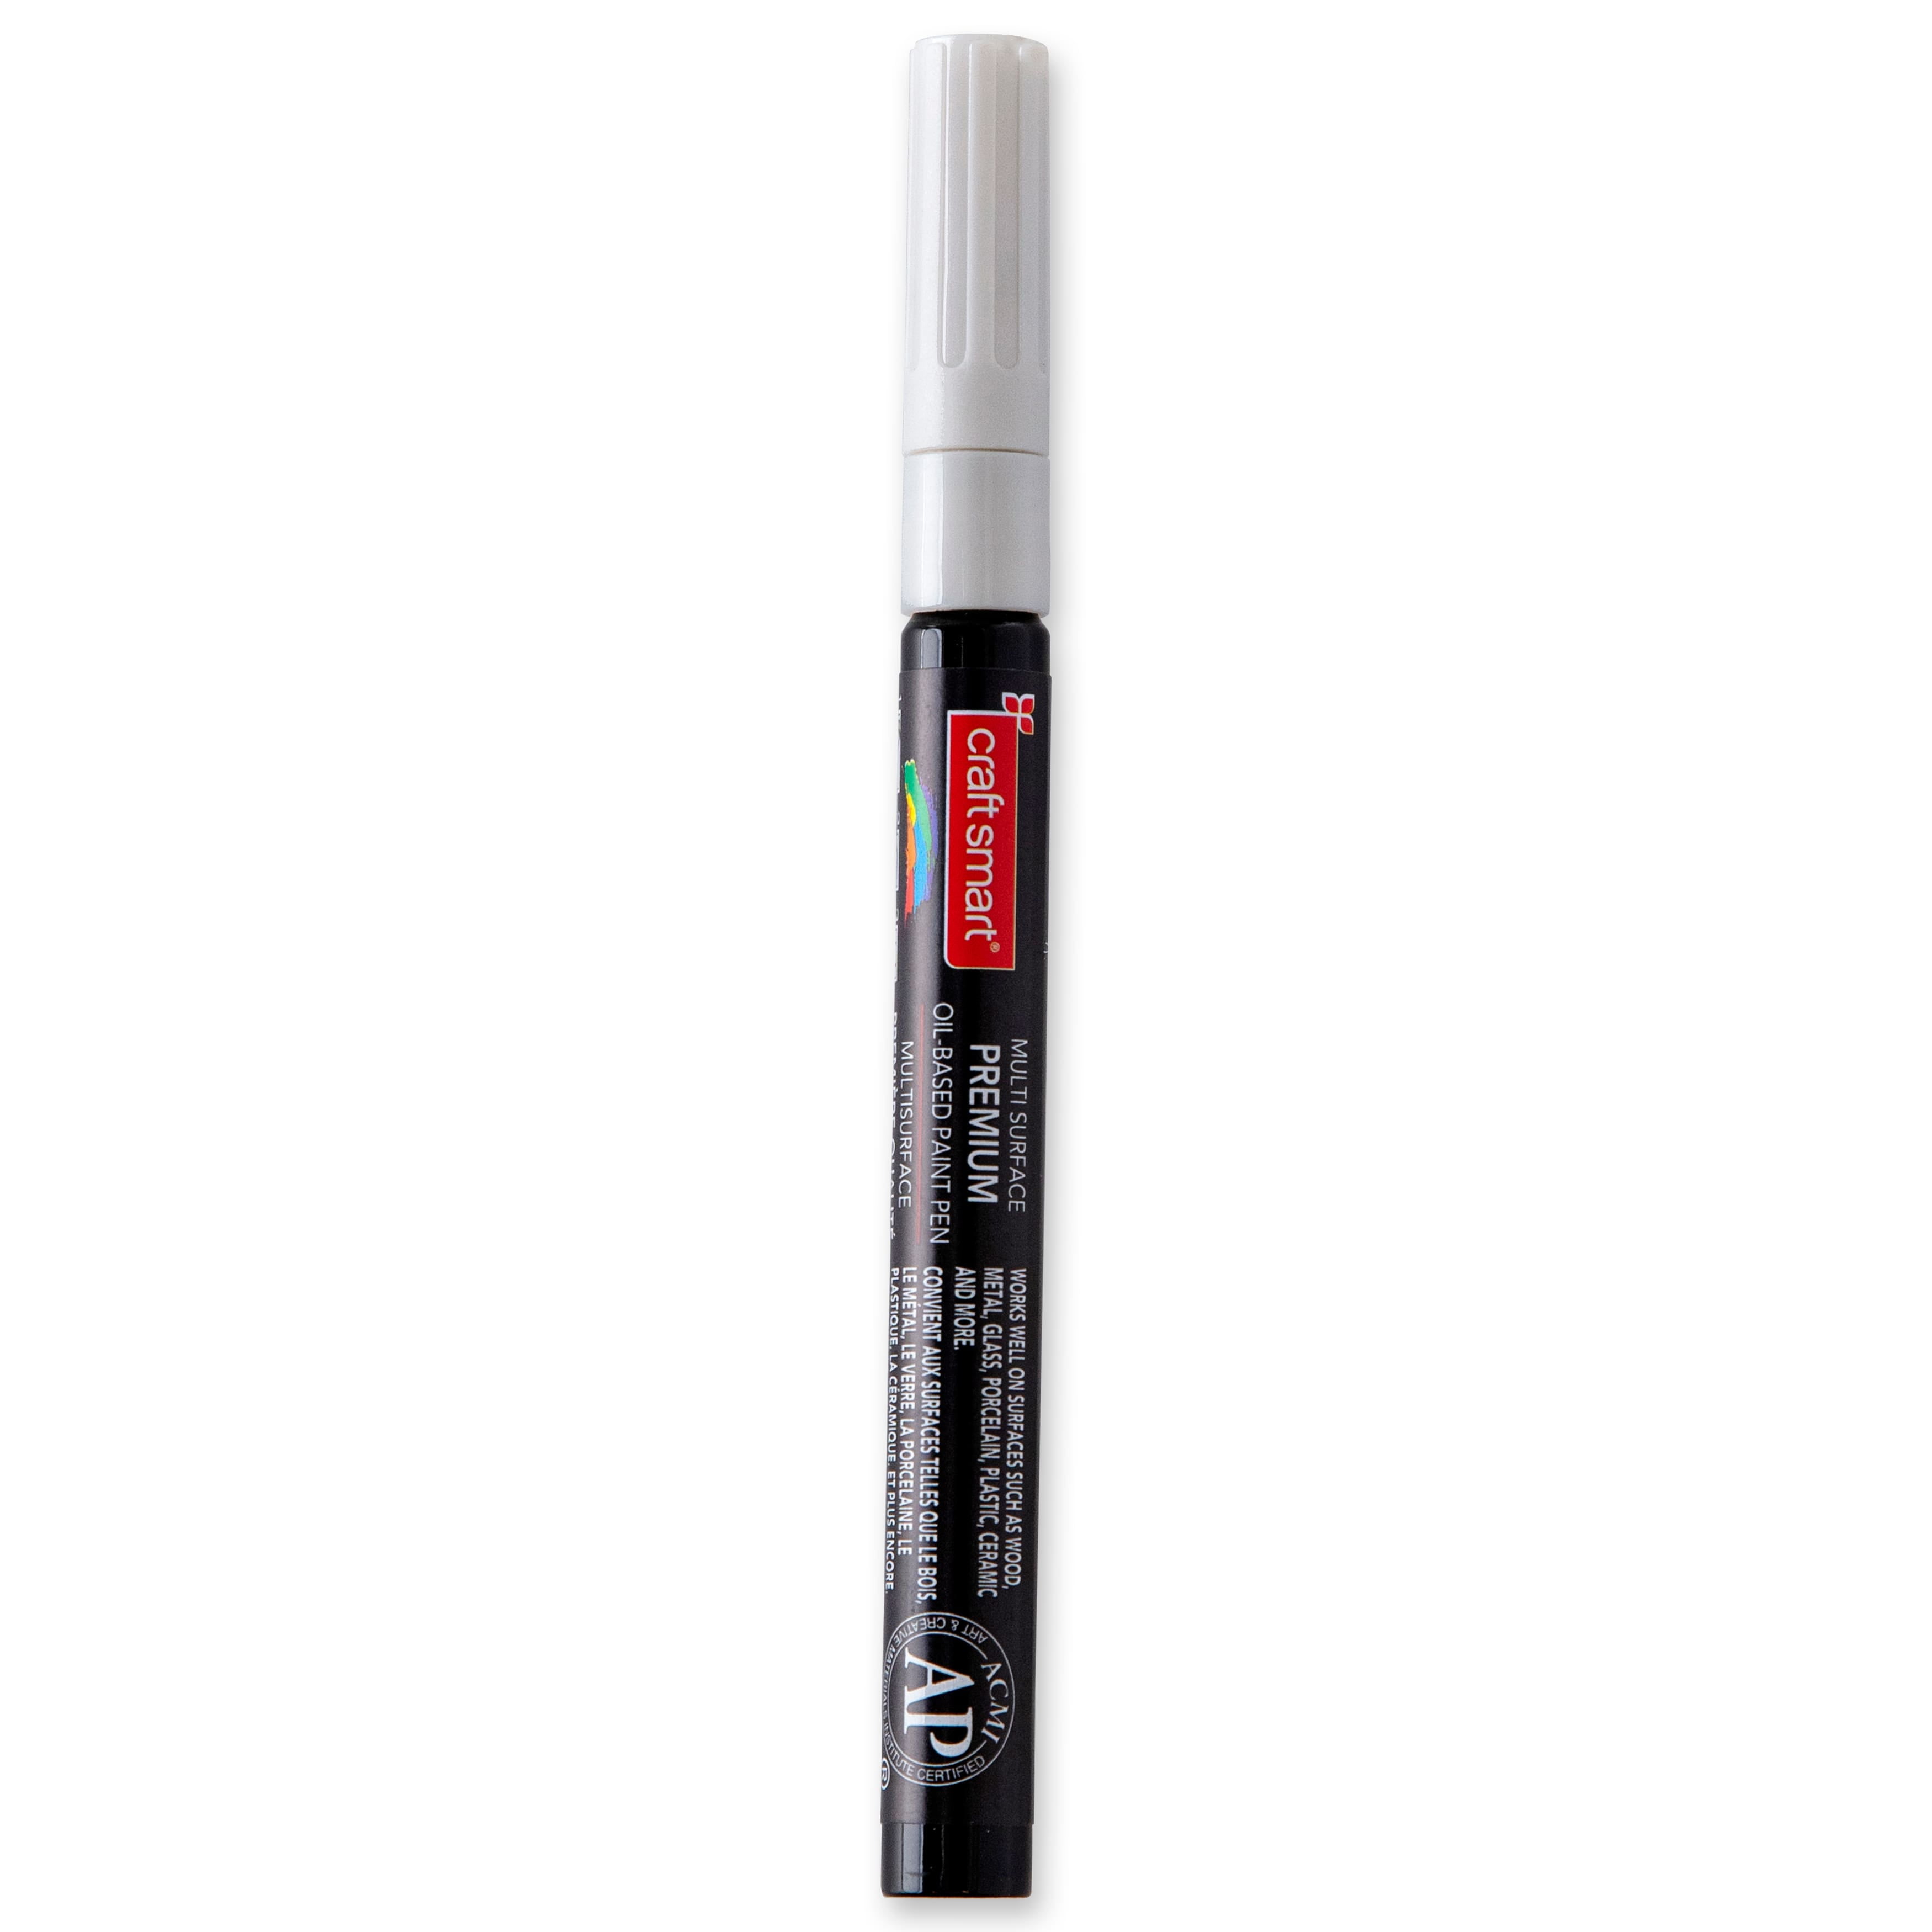 Craft Smart® Paint Pen Set, Black Tie